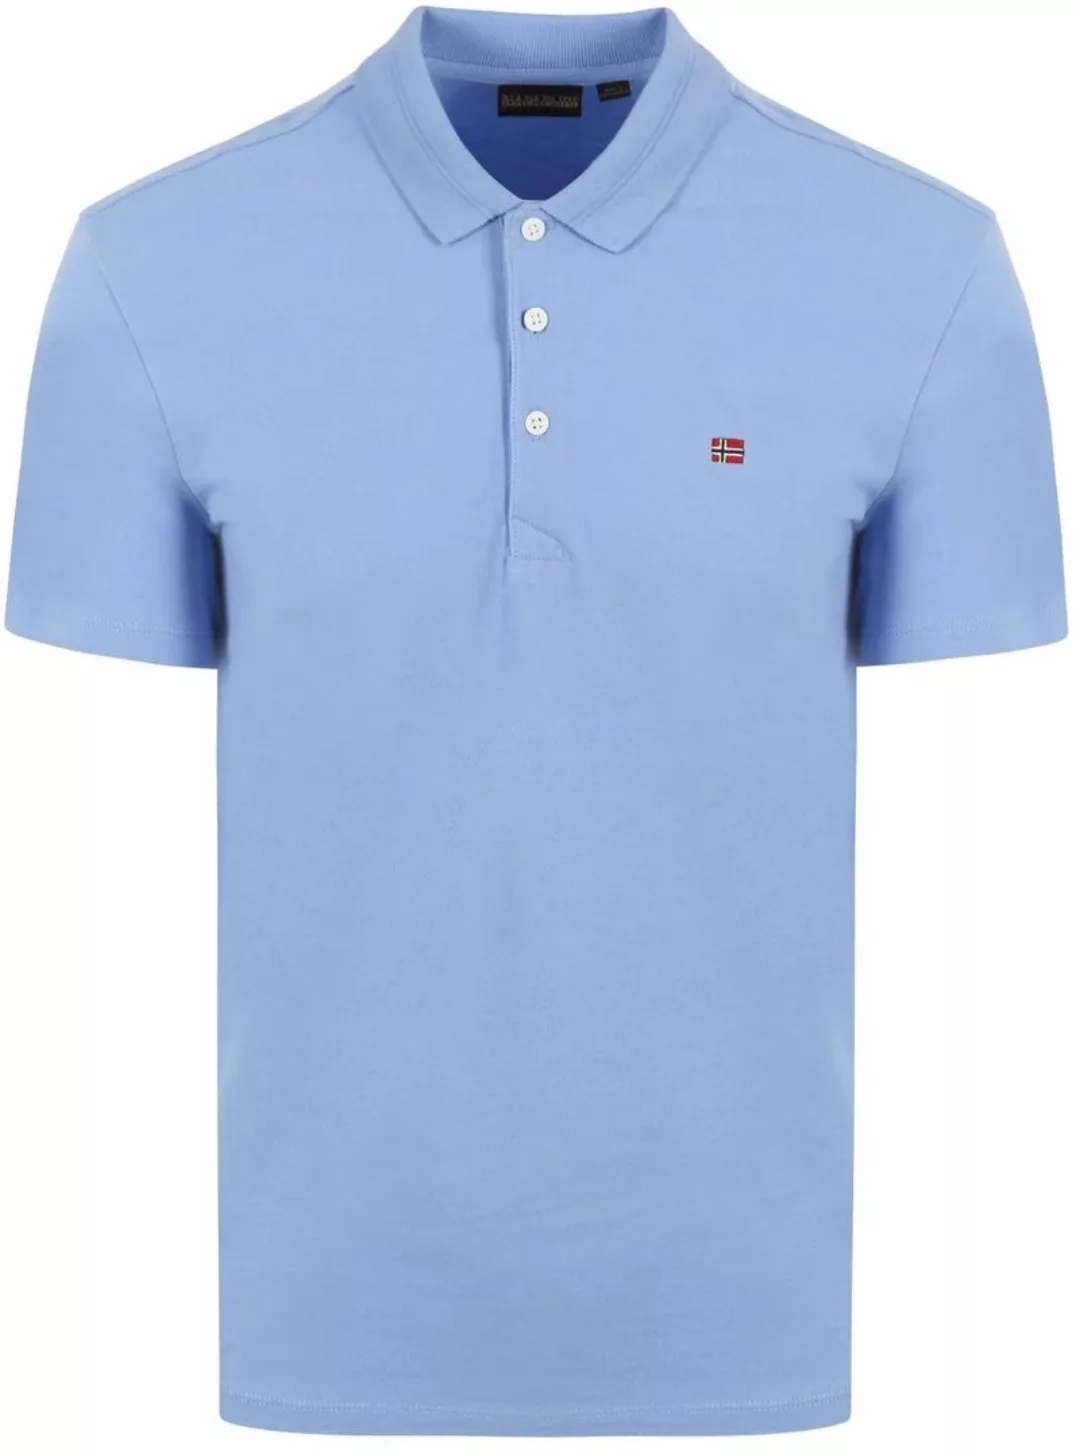 Napapijri Ealis Poloshirt Hellblau - Größe XXL günstig online kaufen